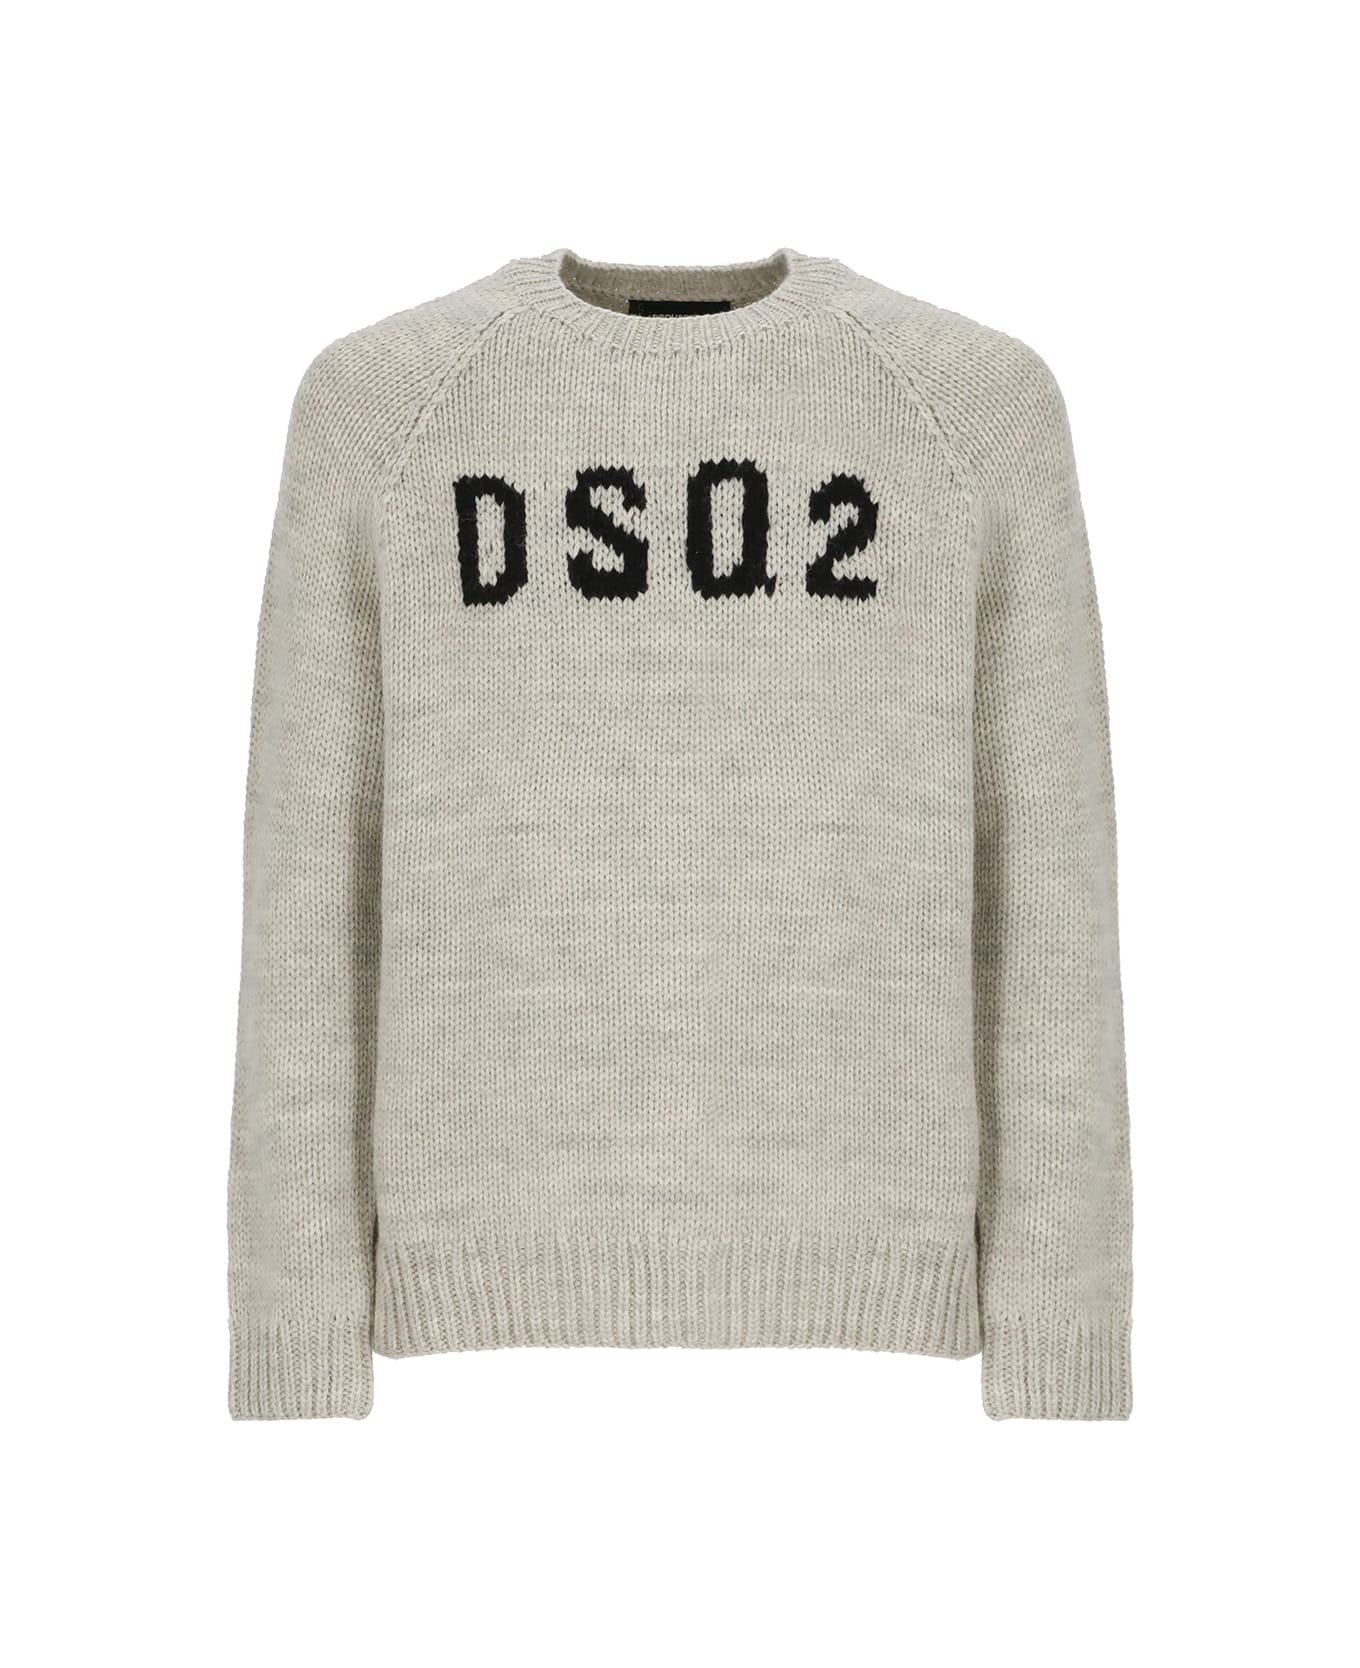 Dsquared2 Wool Sweater - Grey ニットウェア